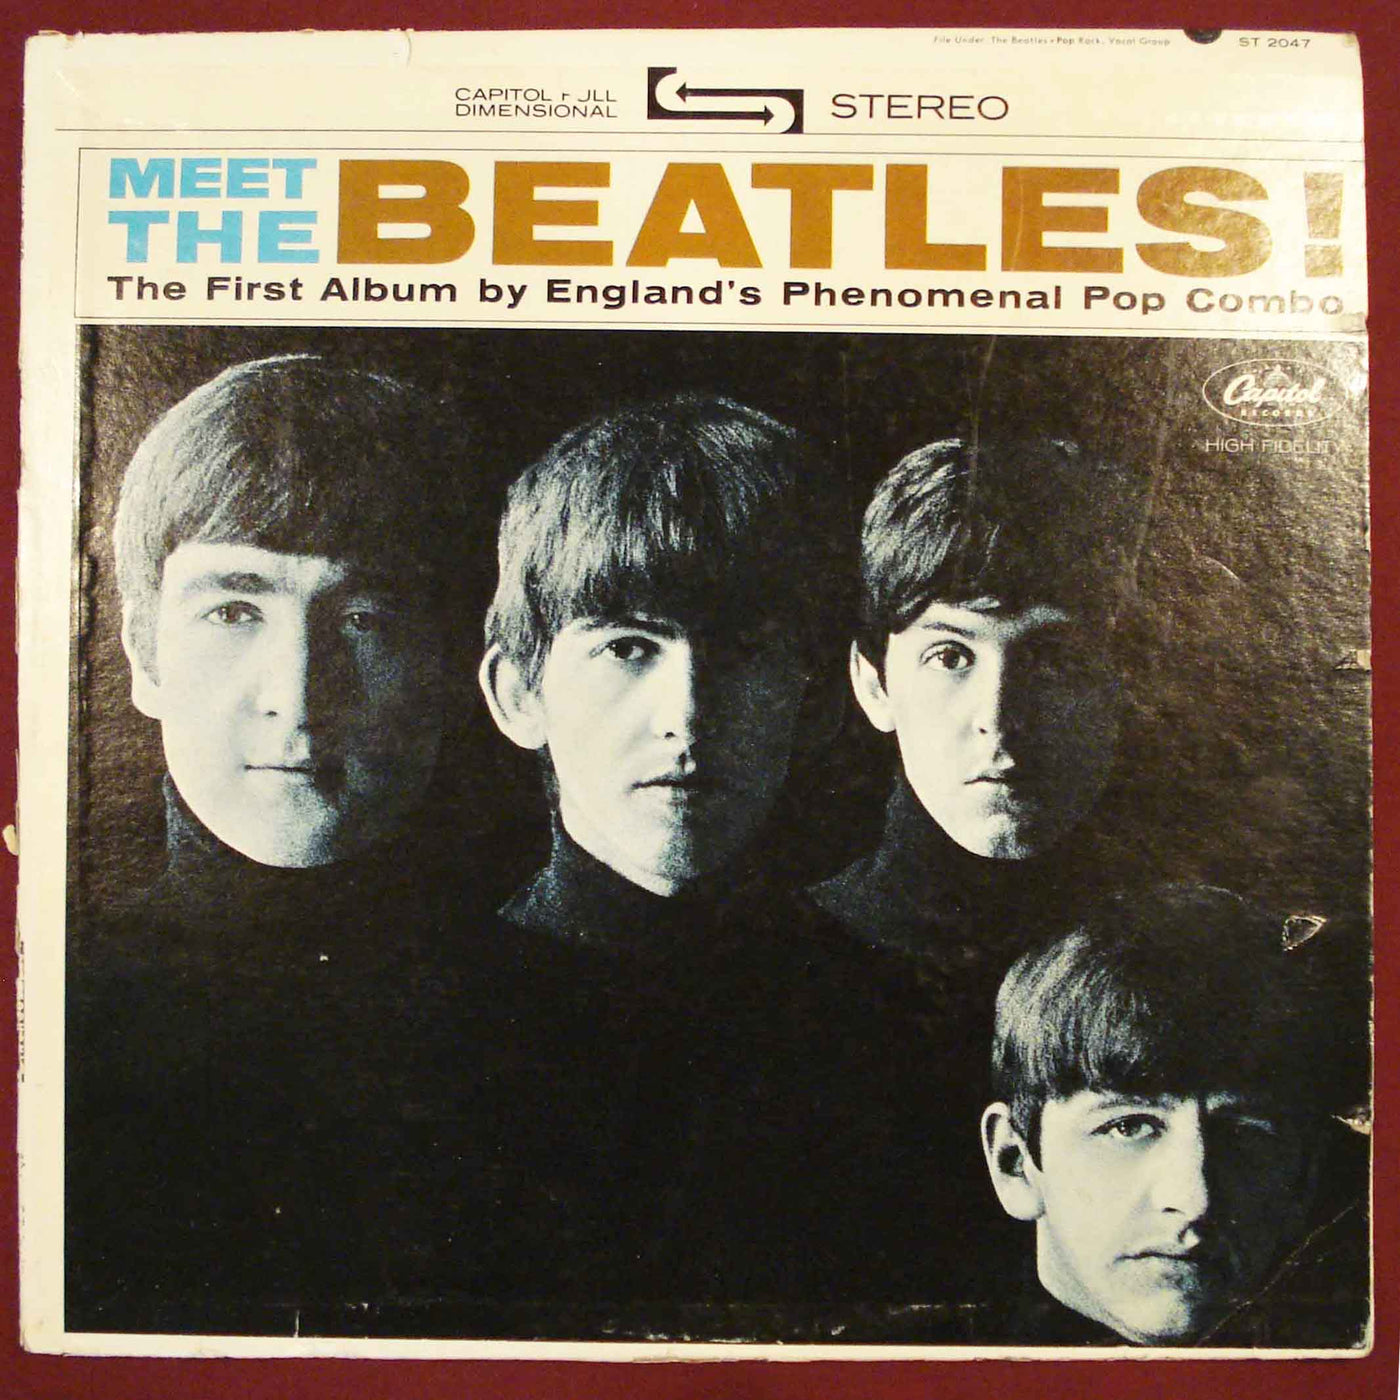 The Beatles - Meet the Beatles Stereo (1964) Vinyl LP 33rpm ST2407